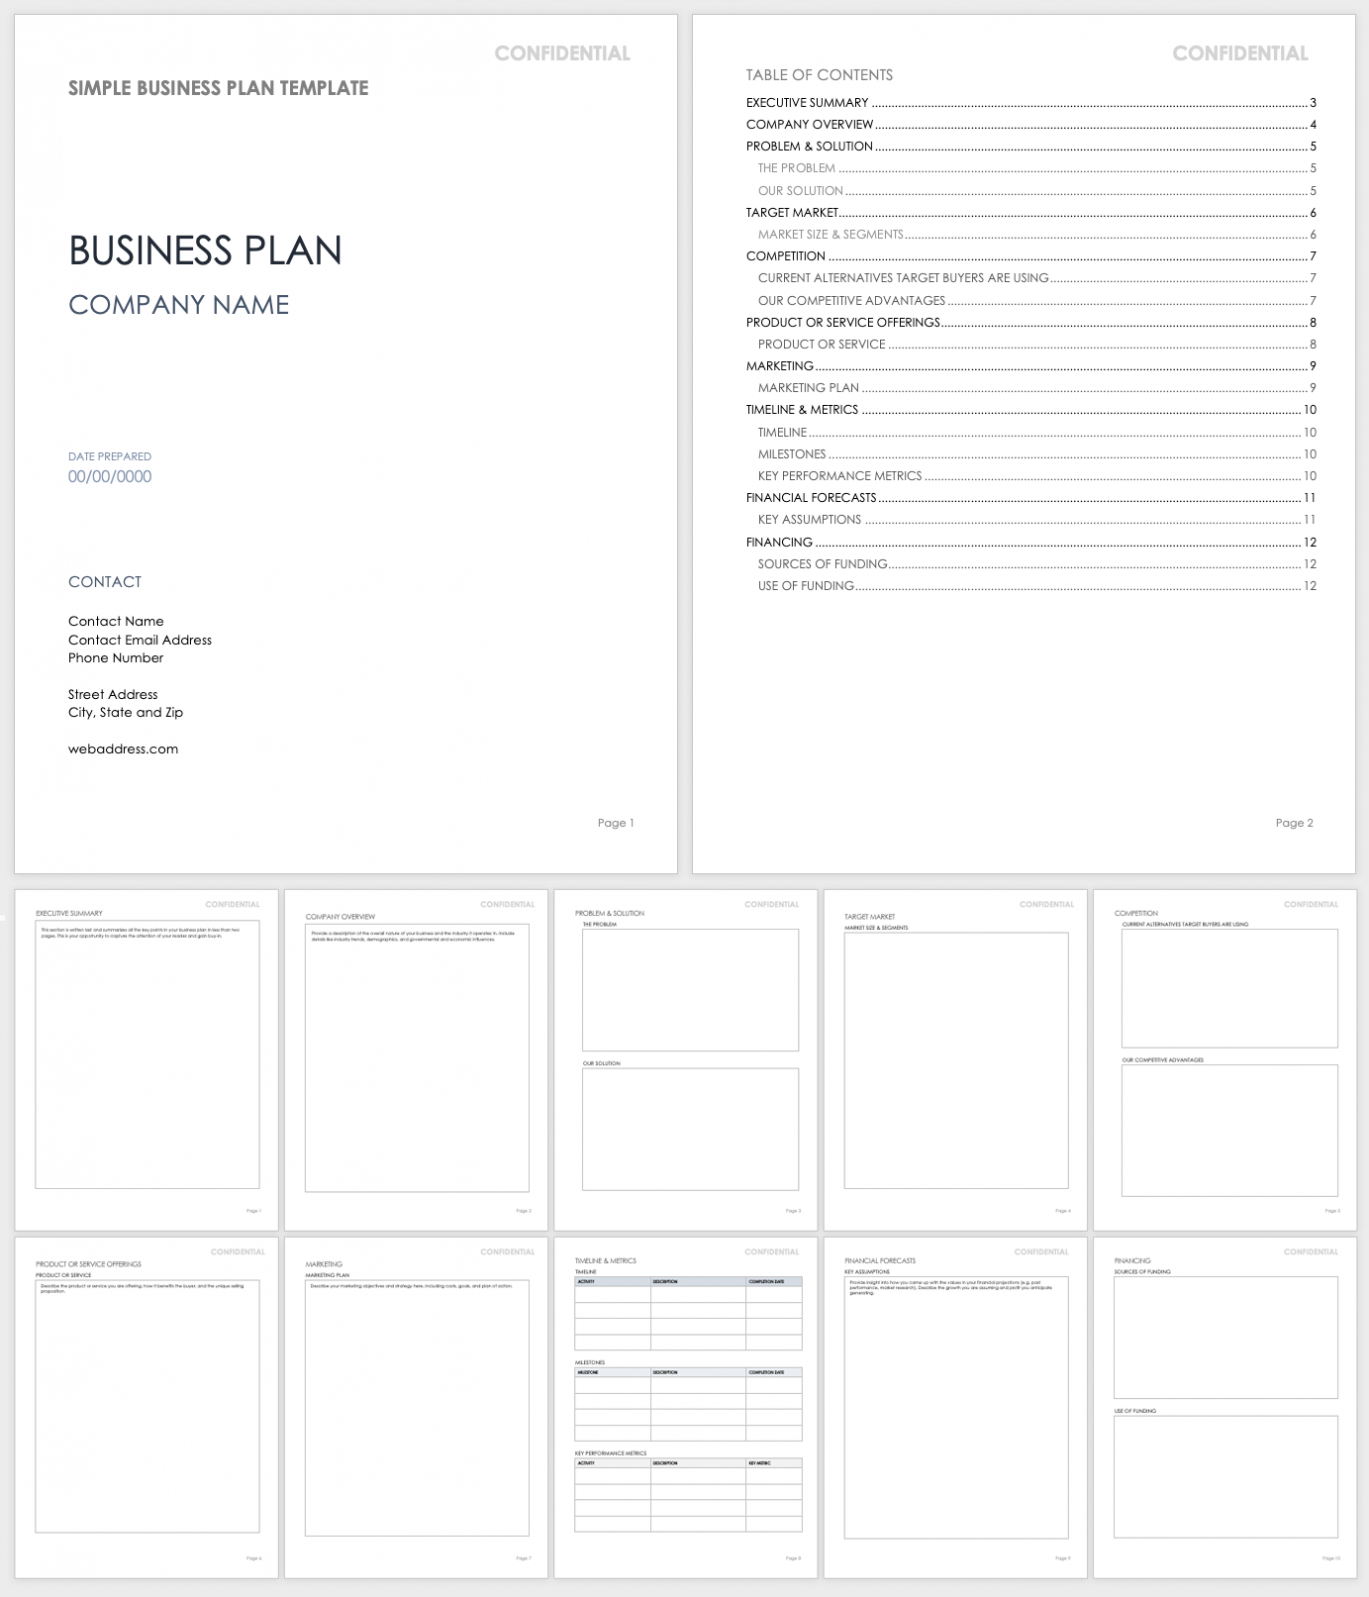 Free Simple Business Plan Templates | Smartsheet for Free Business Plan Template Australia